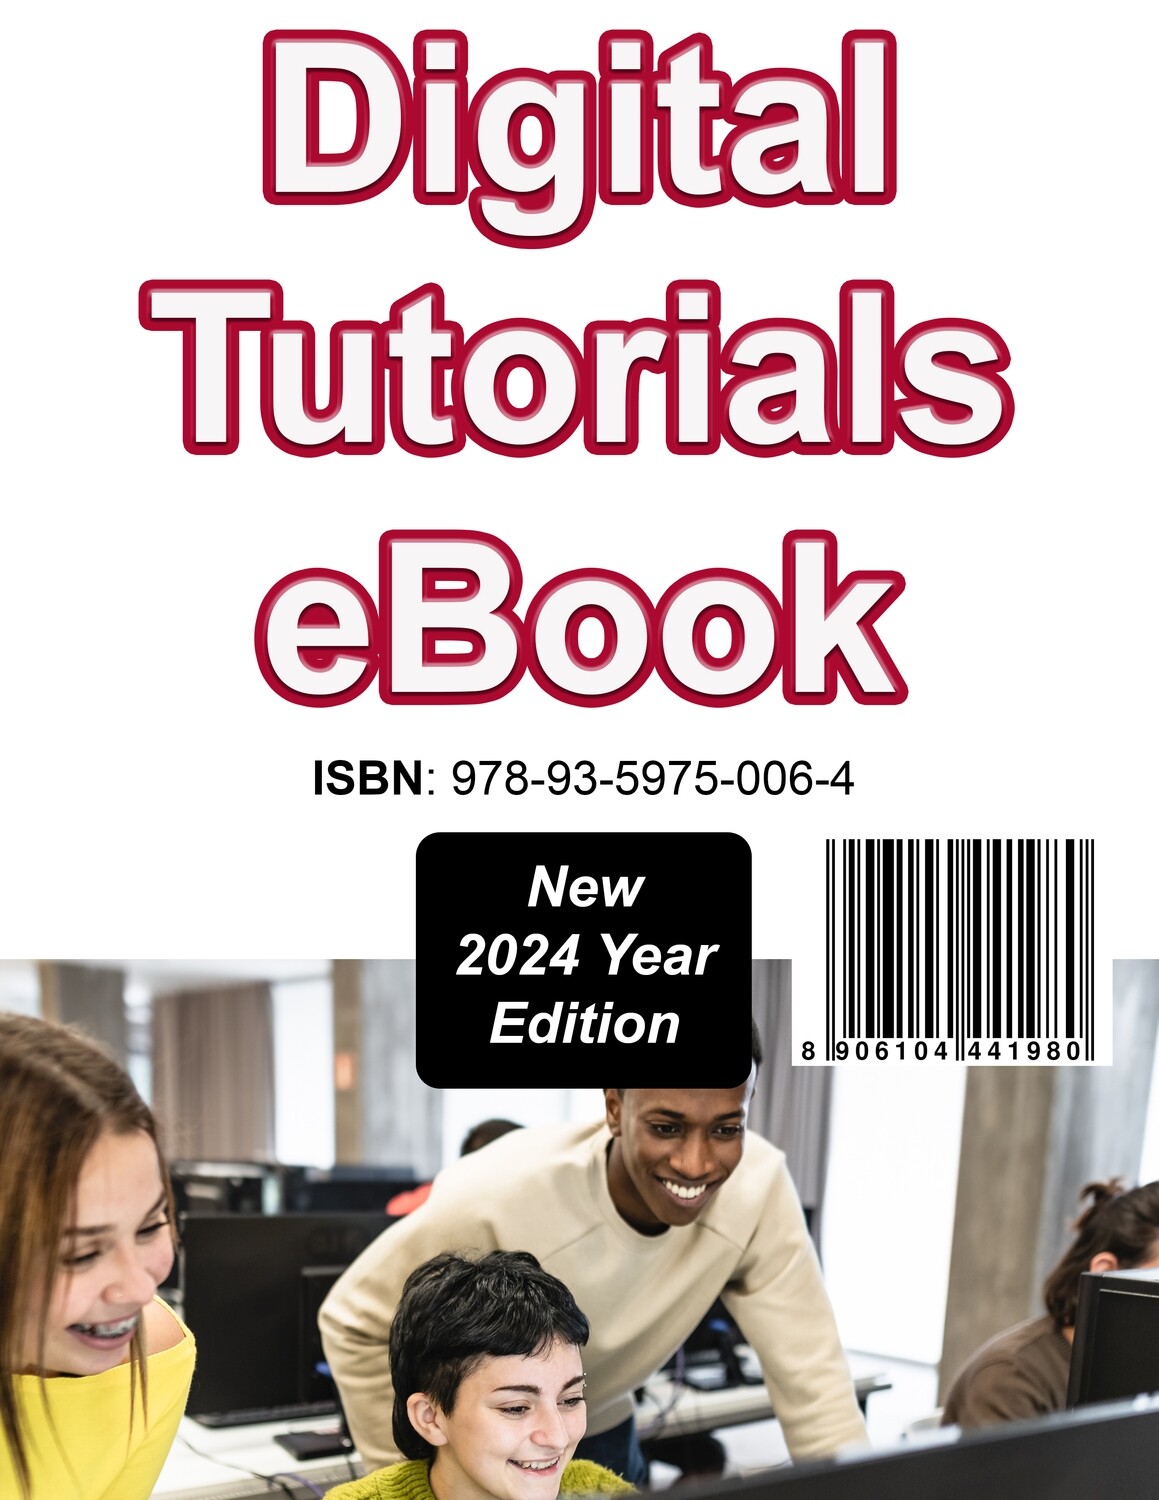 Digital Tutorials eBook